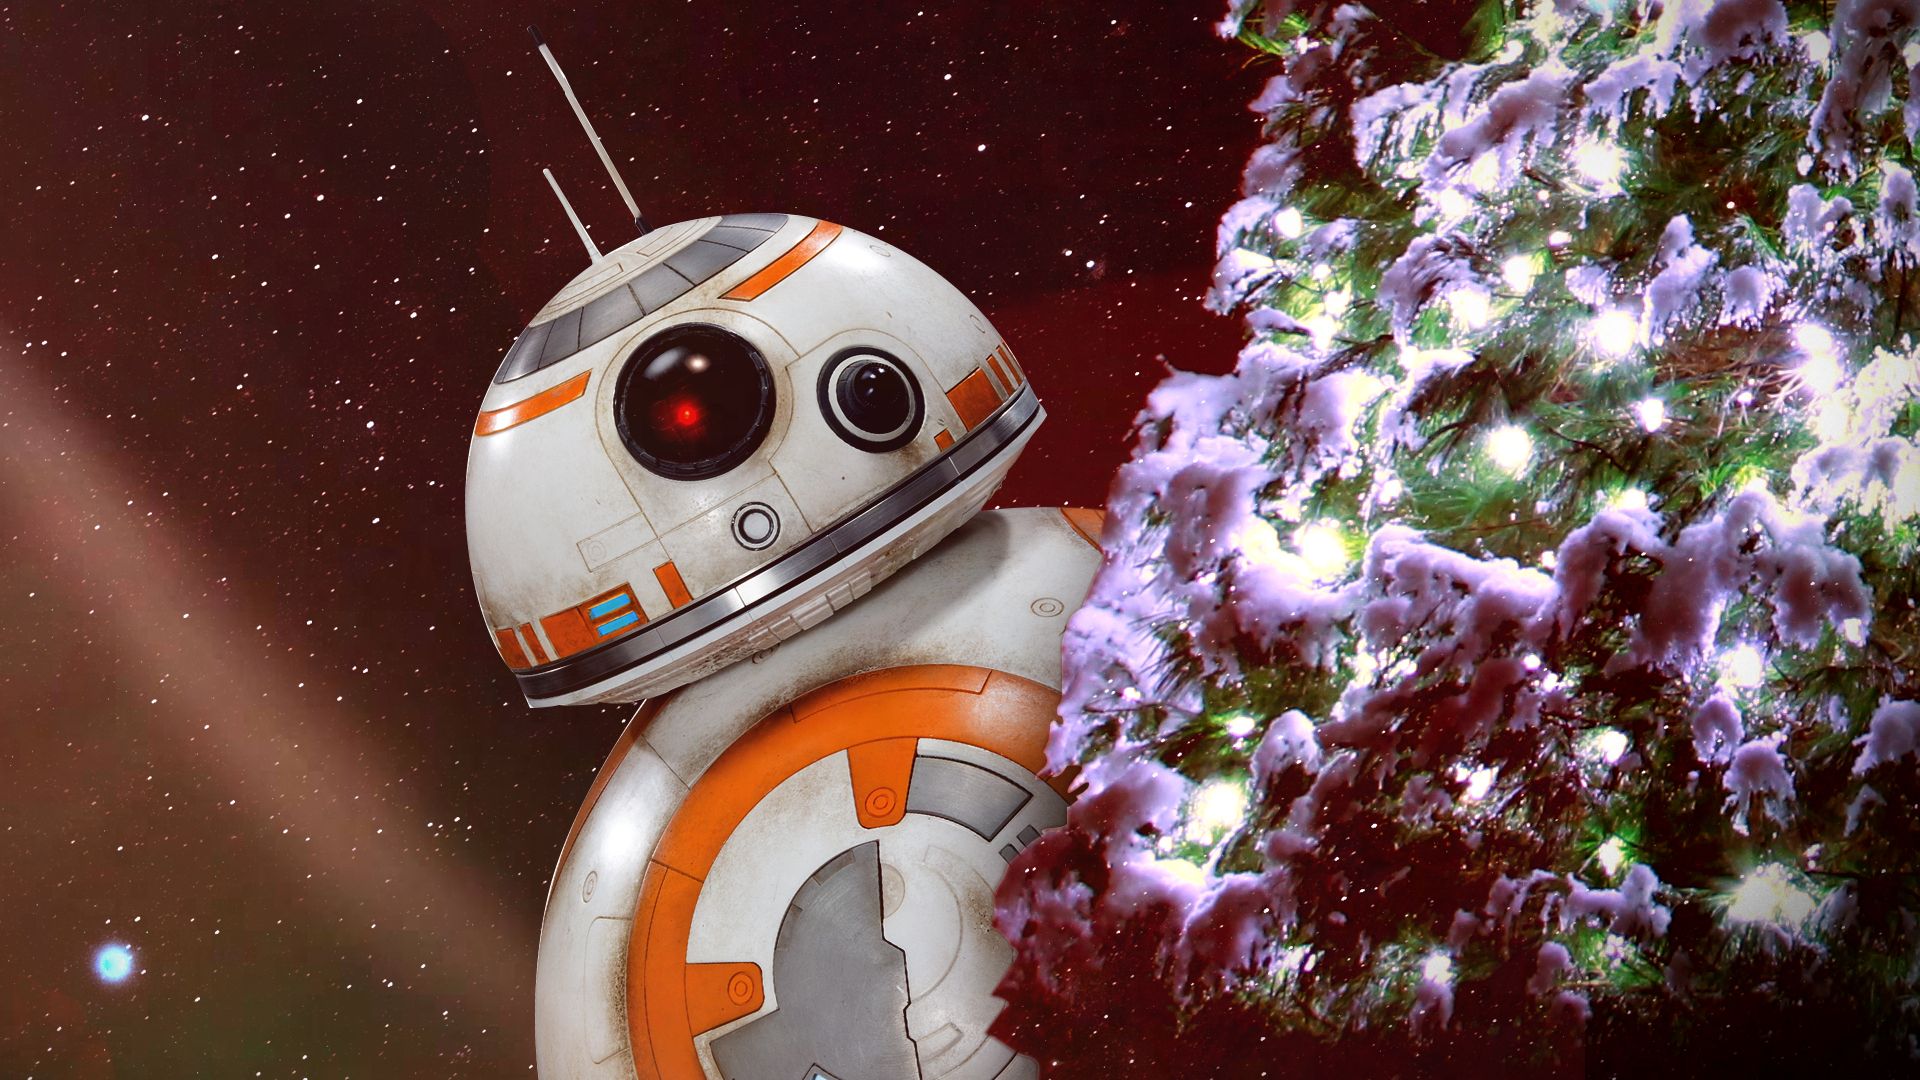 Star Wars Holiday Special Wallpaper. Holiday Wallpaper, Holiday Computer Wallpaper and HD Holiday Wallpaper